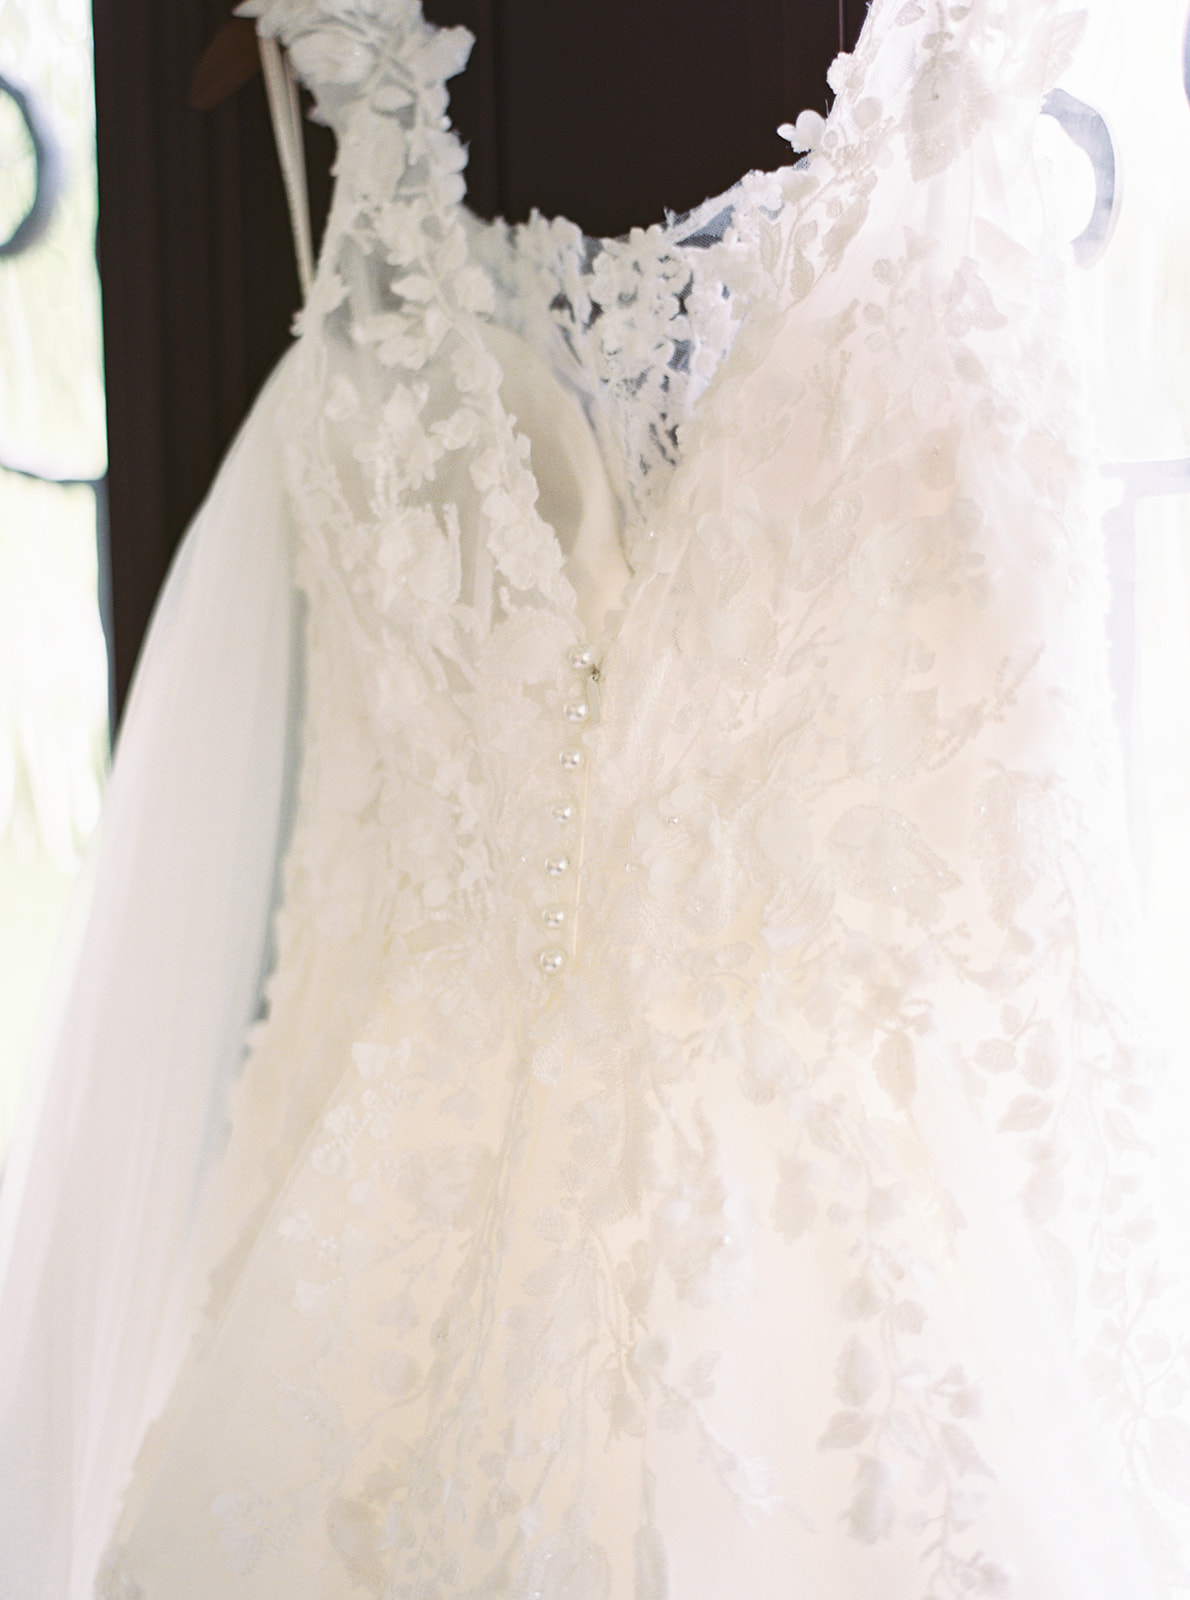 morais vineyard winery virginia bealeton wedding lace a line white wedding dress poofy flowy flower details long veil